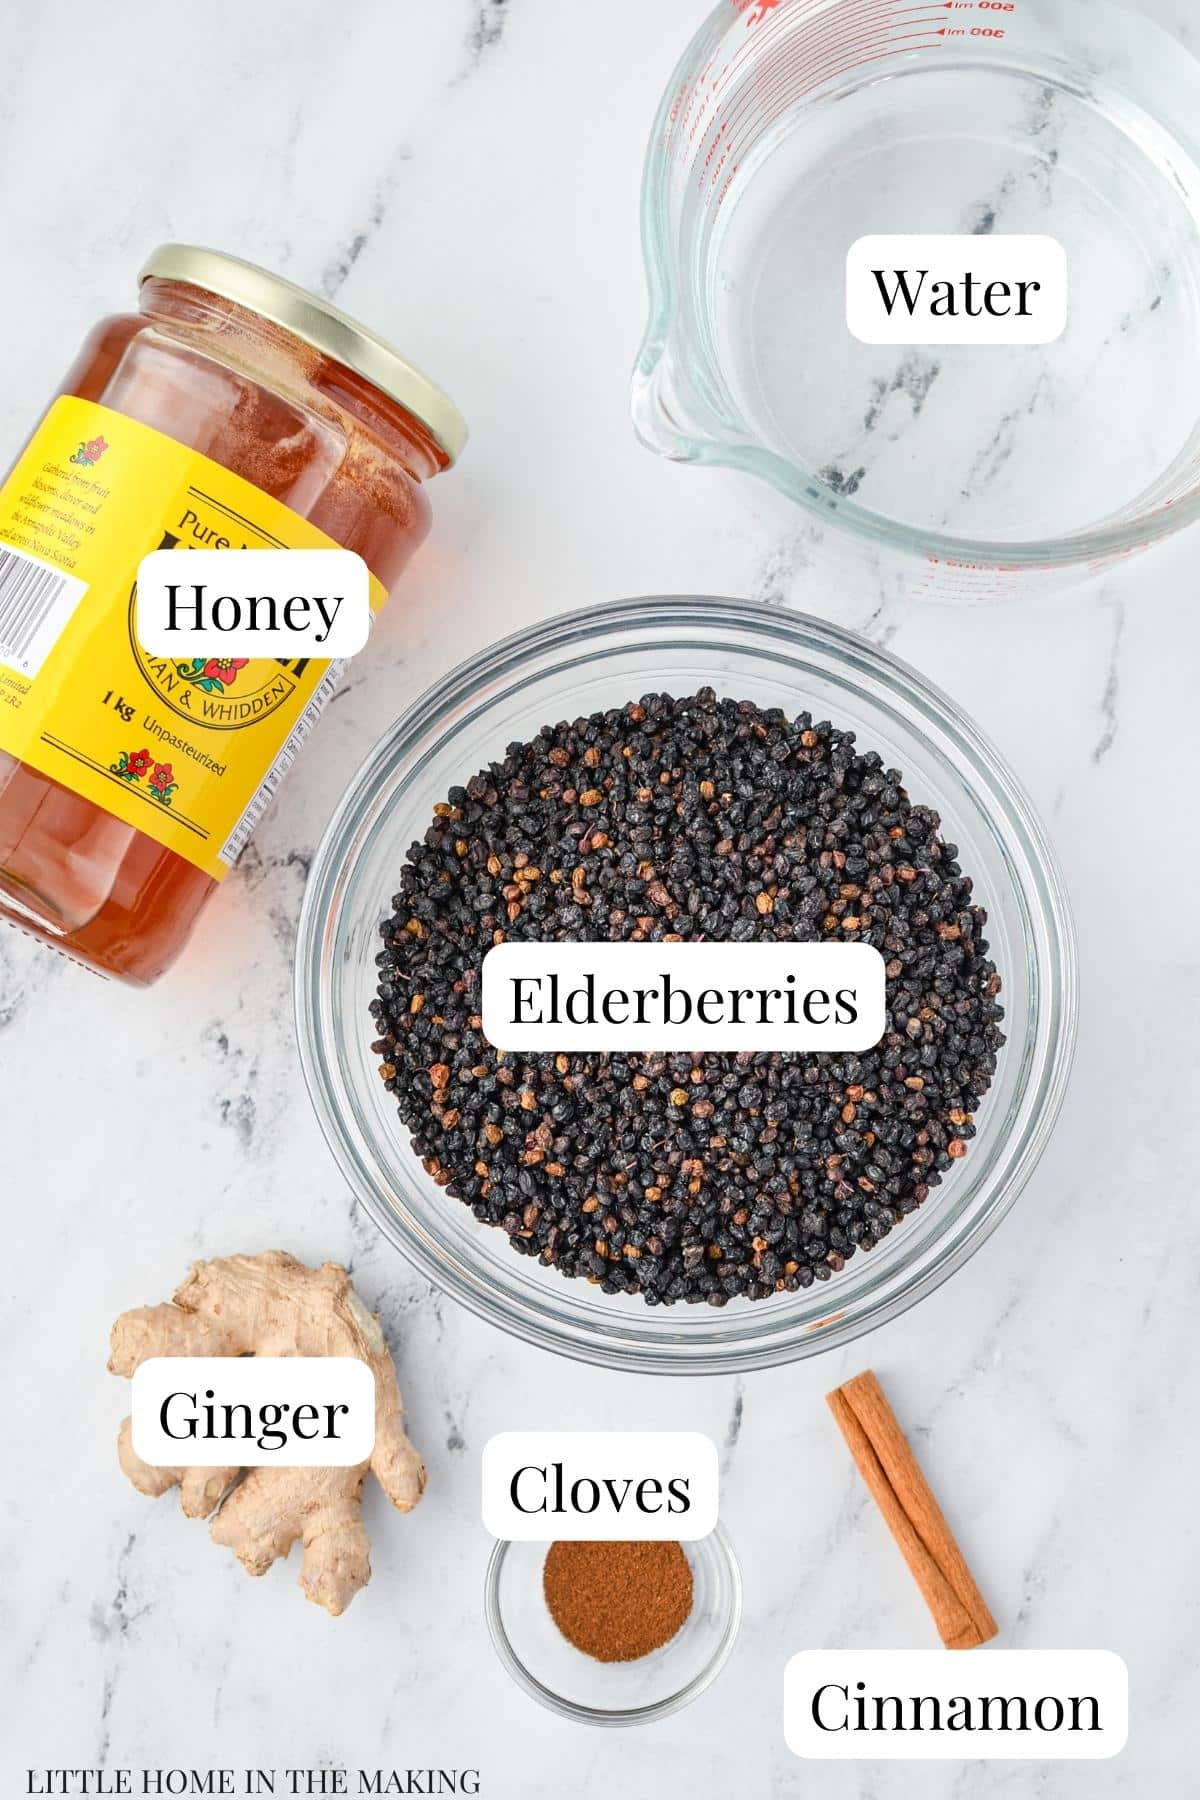 The ingredients needed to make elderberry syrup: dried elderberries, honey, water, ginger, cloves, and cinnamon. 